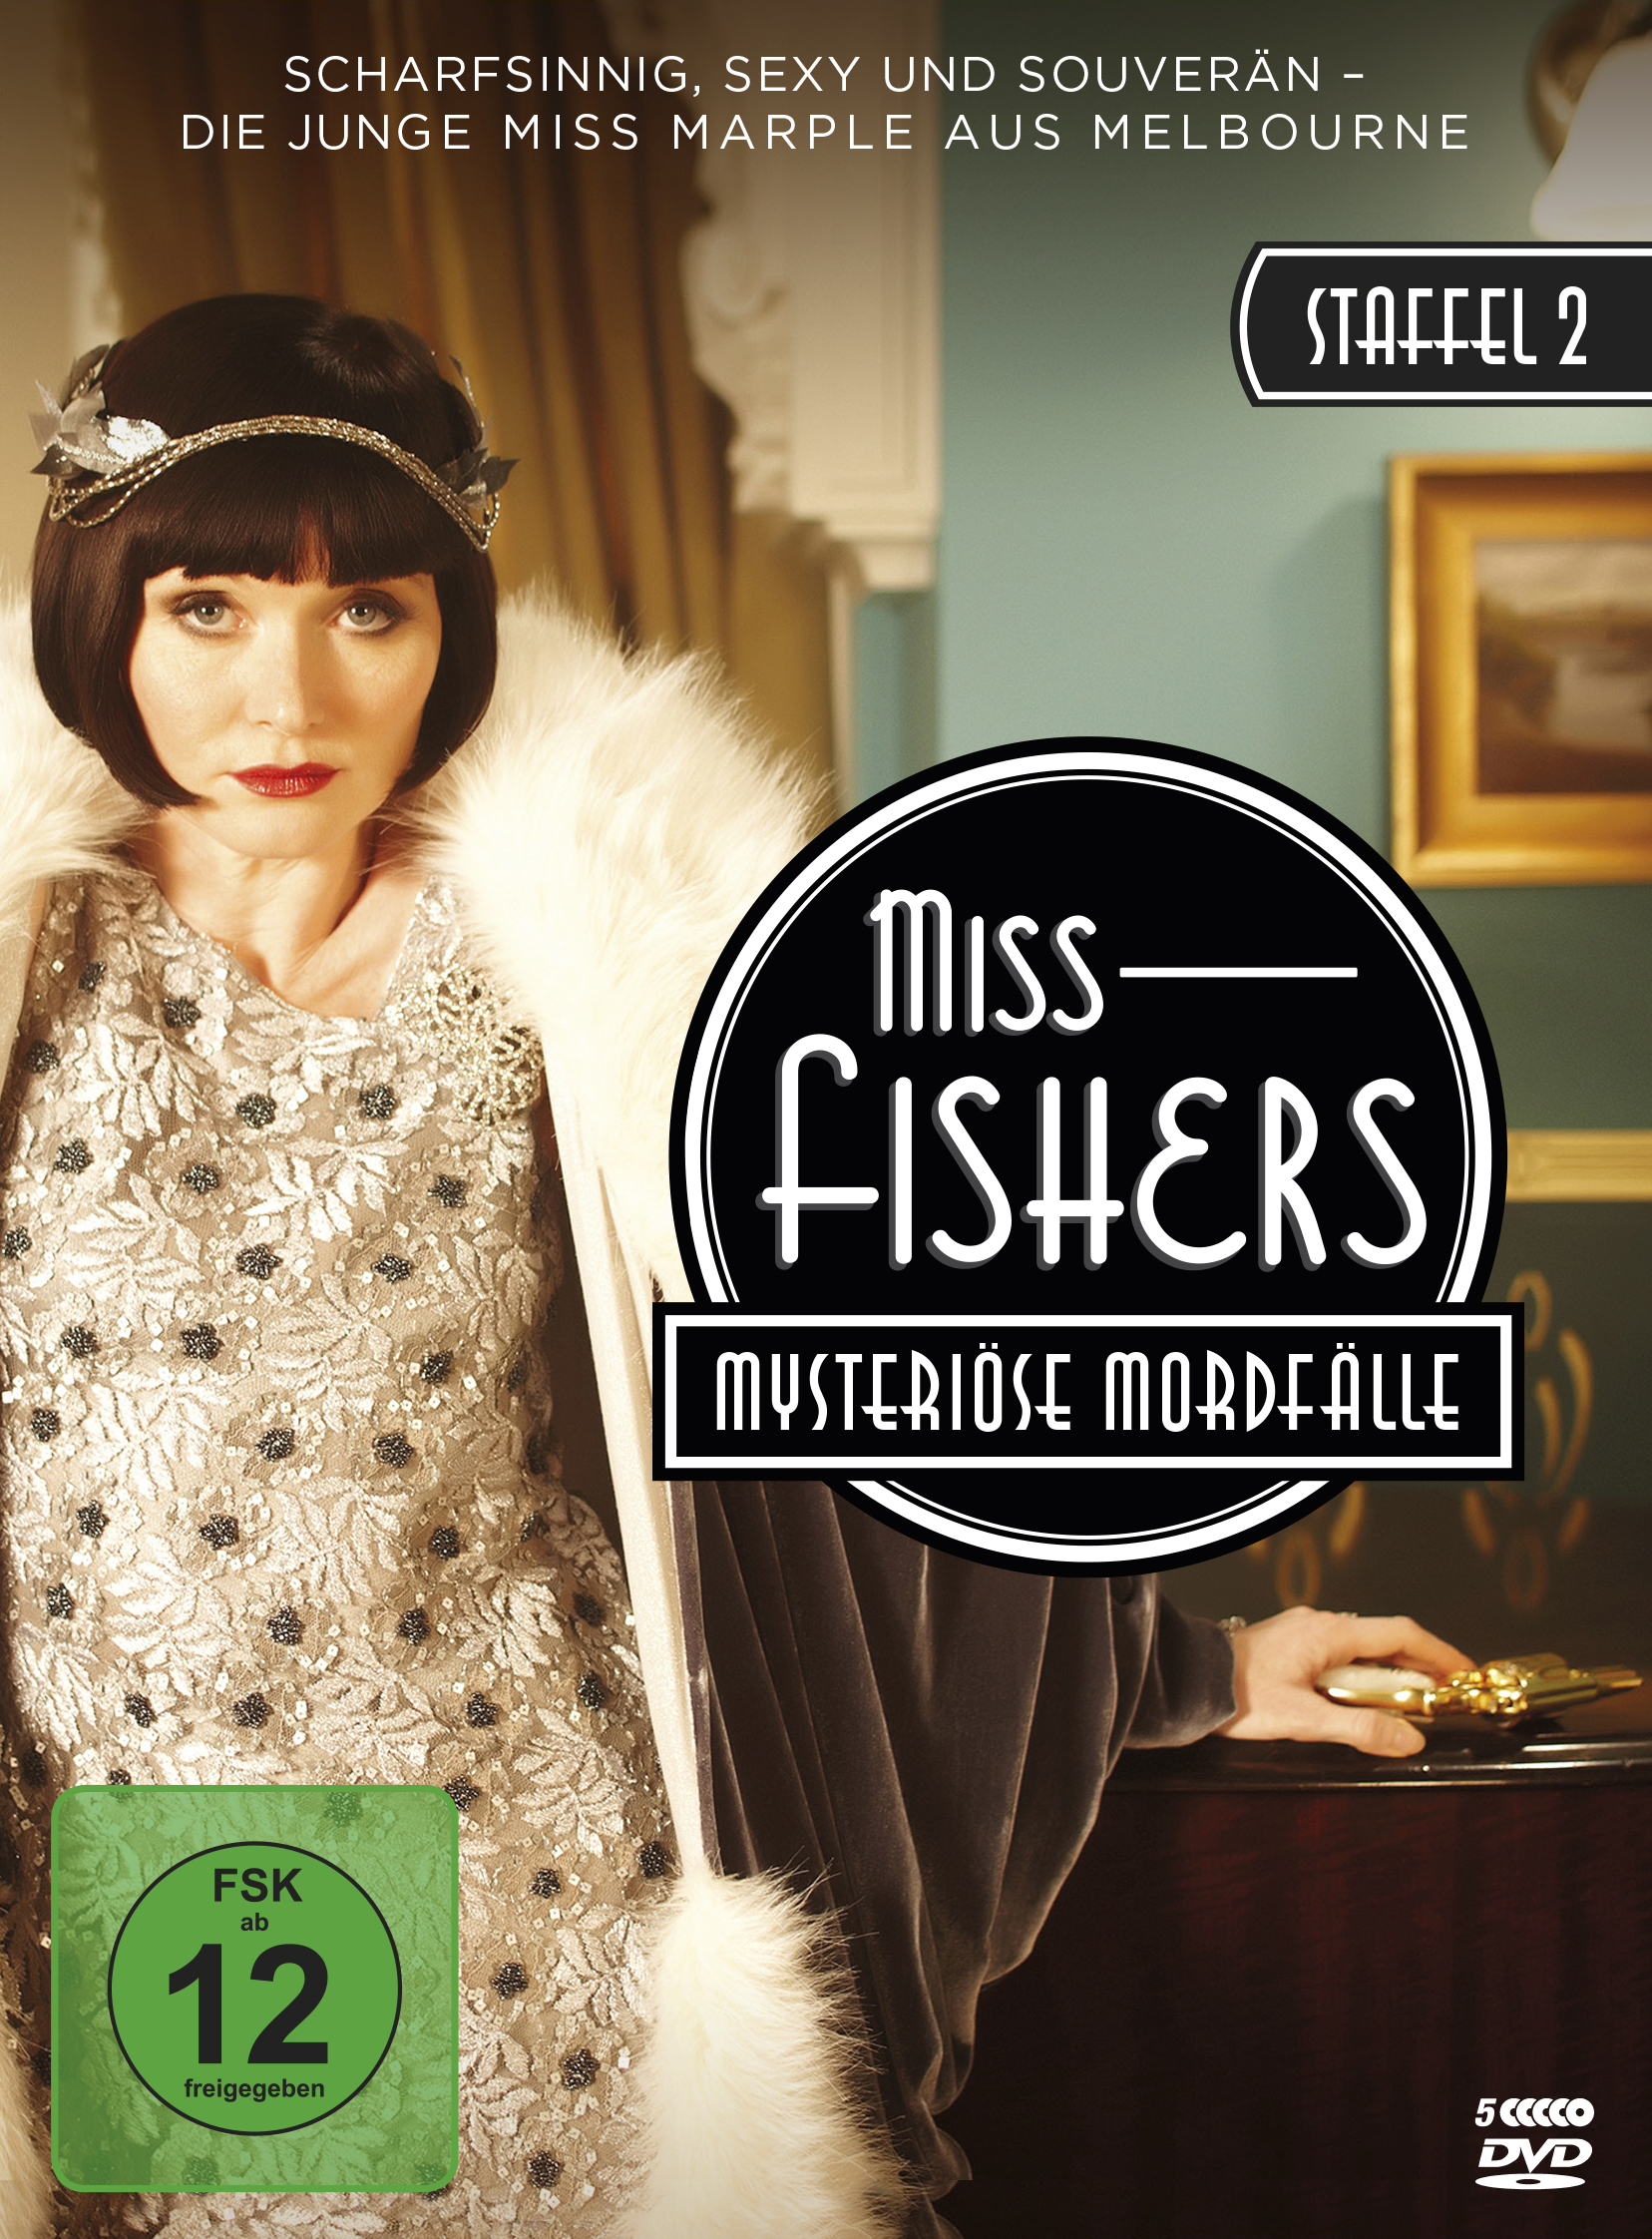 Fishers DVD 2 Miss Mordfälle Staffel - mysteriöse